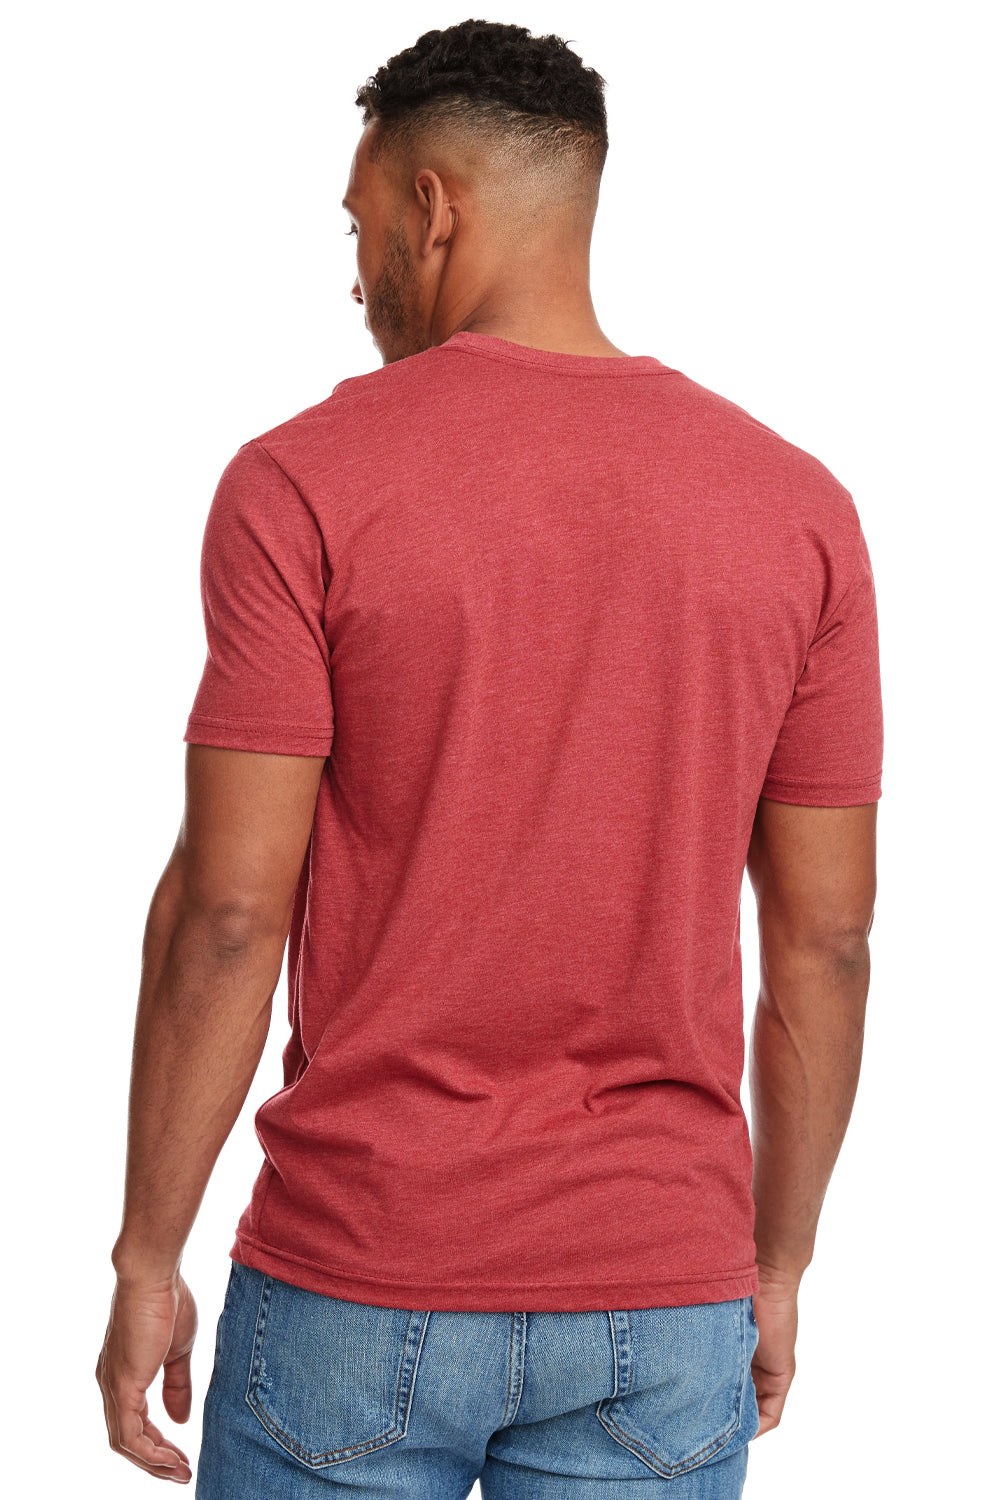 Next Level N6210 Mens CVC Jersey Short Sleeve Crewneck T-Shirt Cardinal Red Back